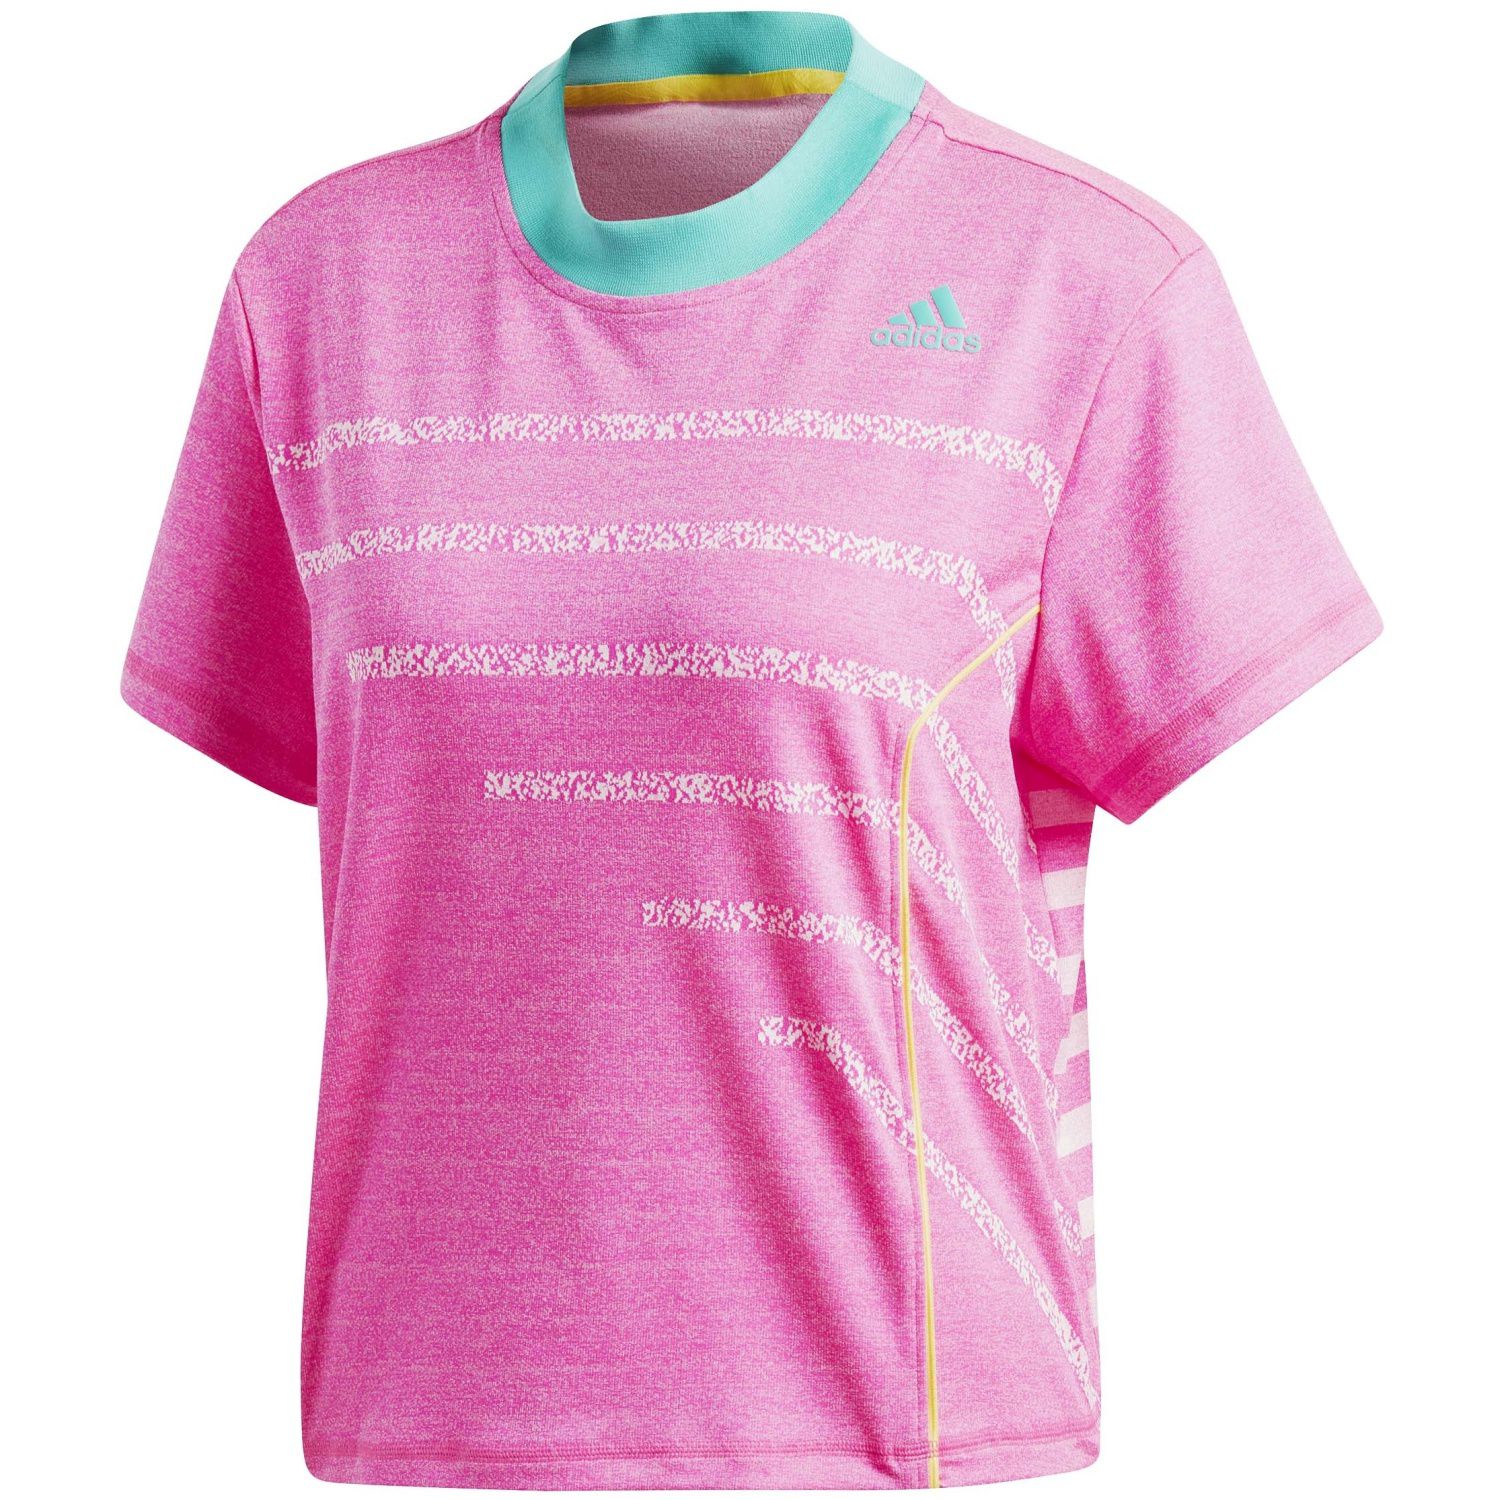 Camiseta adidas Seasonal Shock - rosa - 